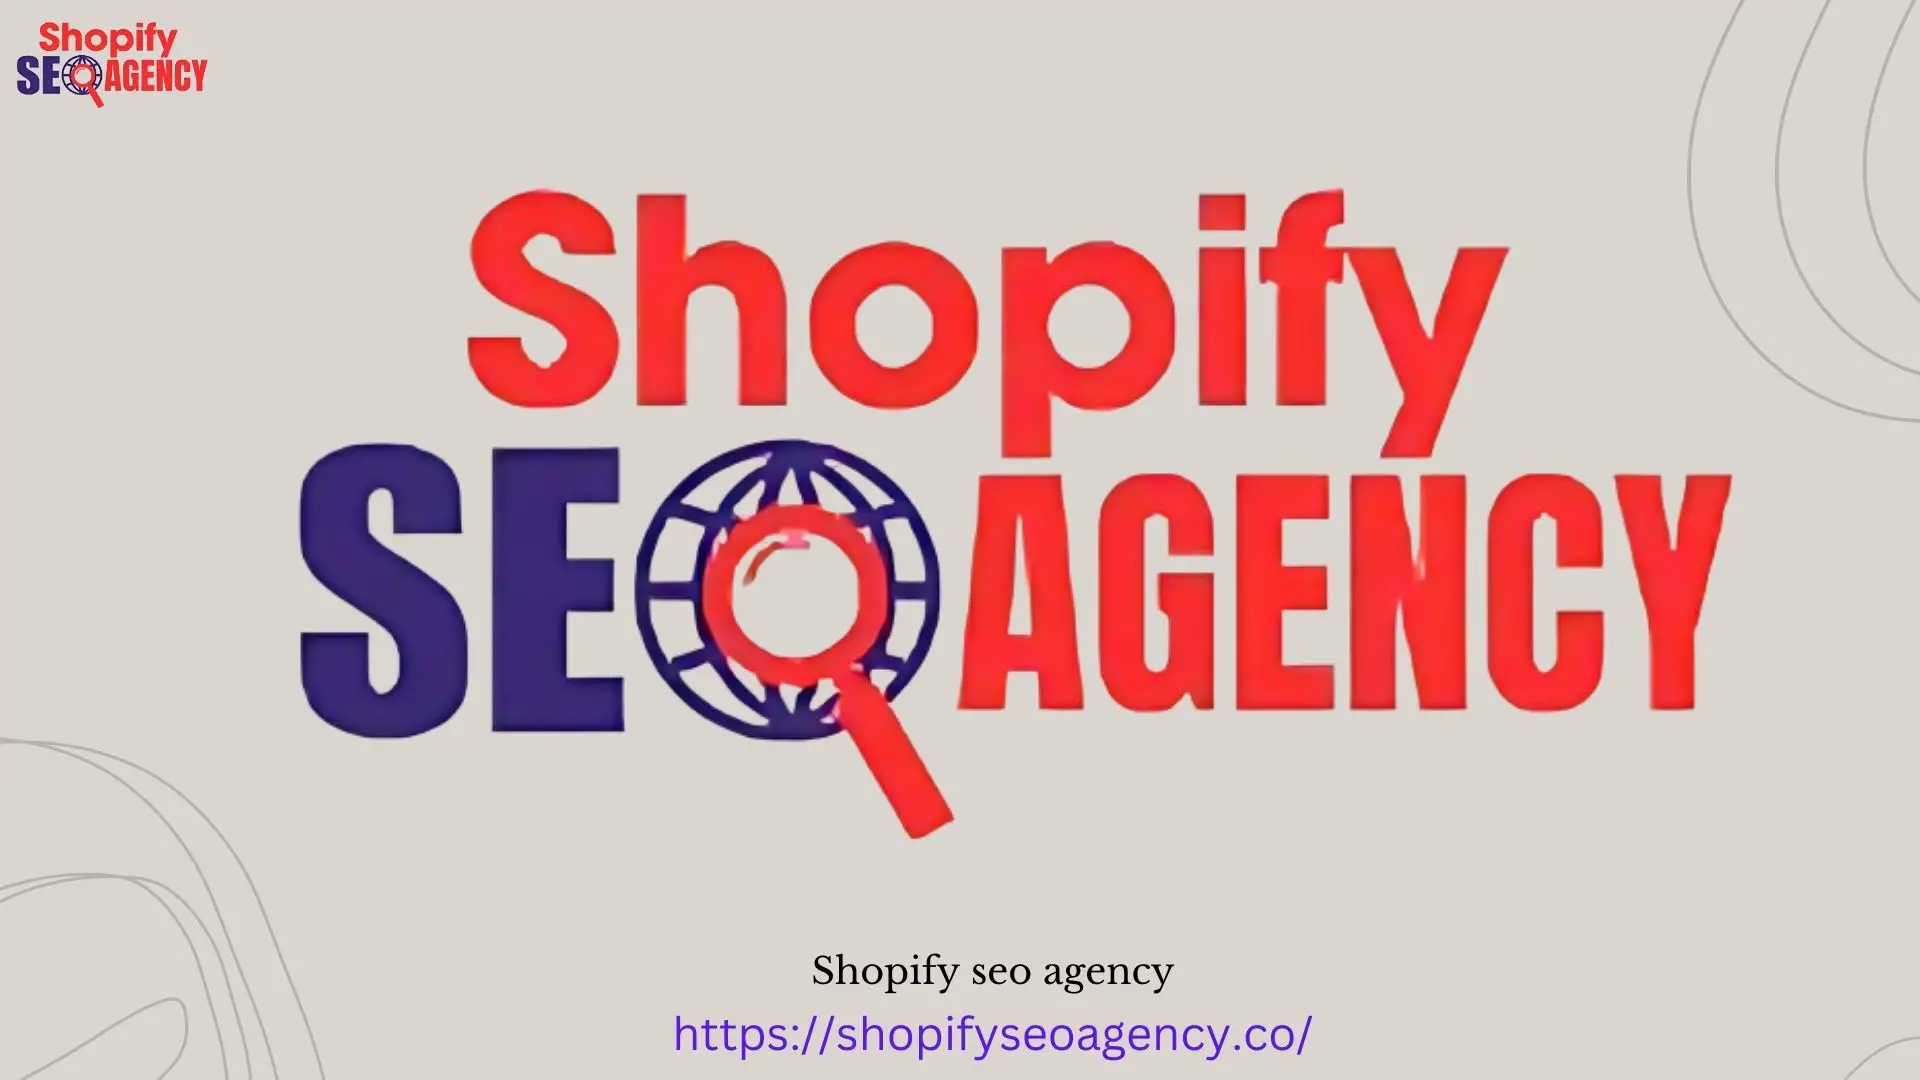 Shopify seo agency